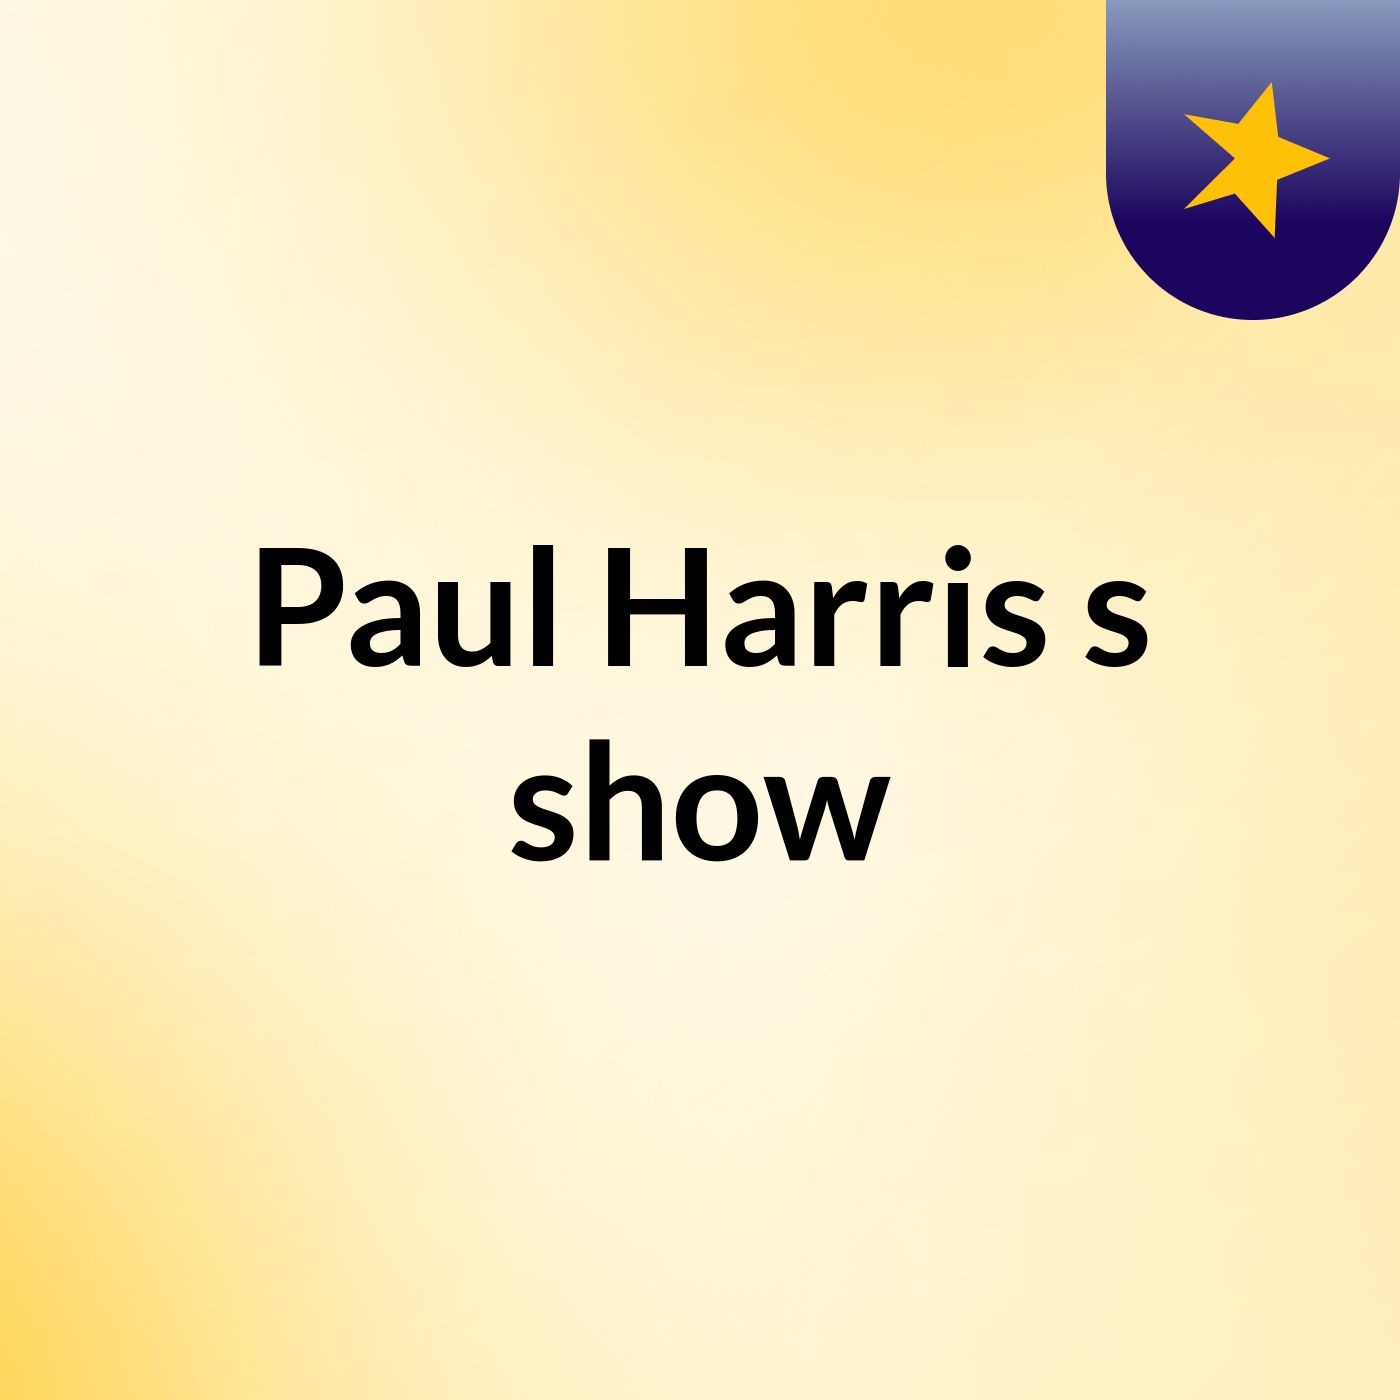 Paul Harris's show